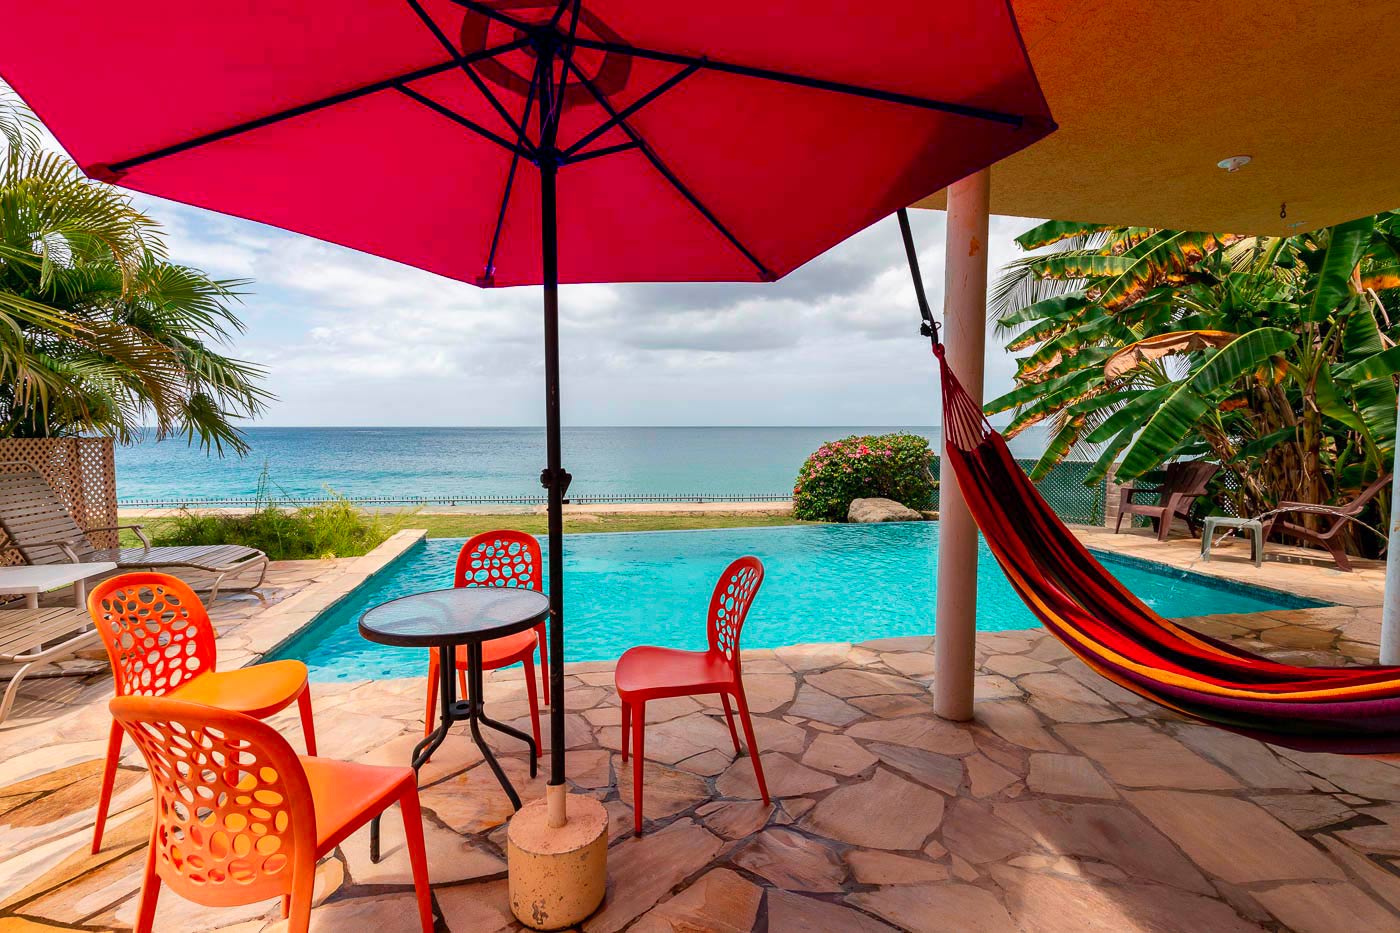 Birdie's Nest, Tobago - ideal holiday accommodation